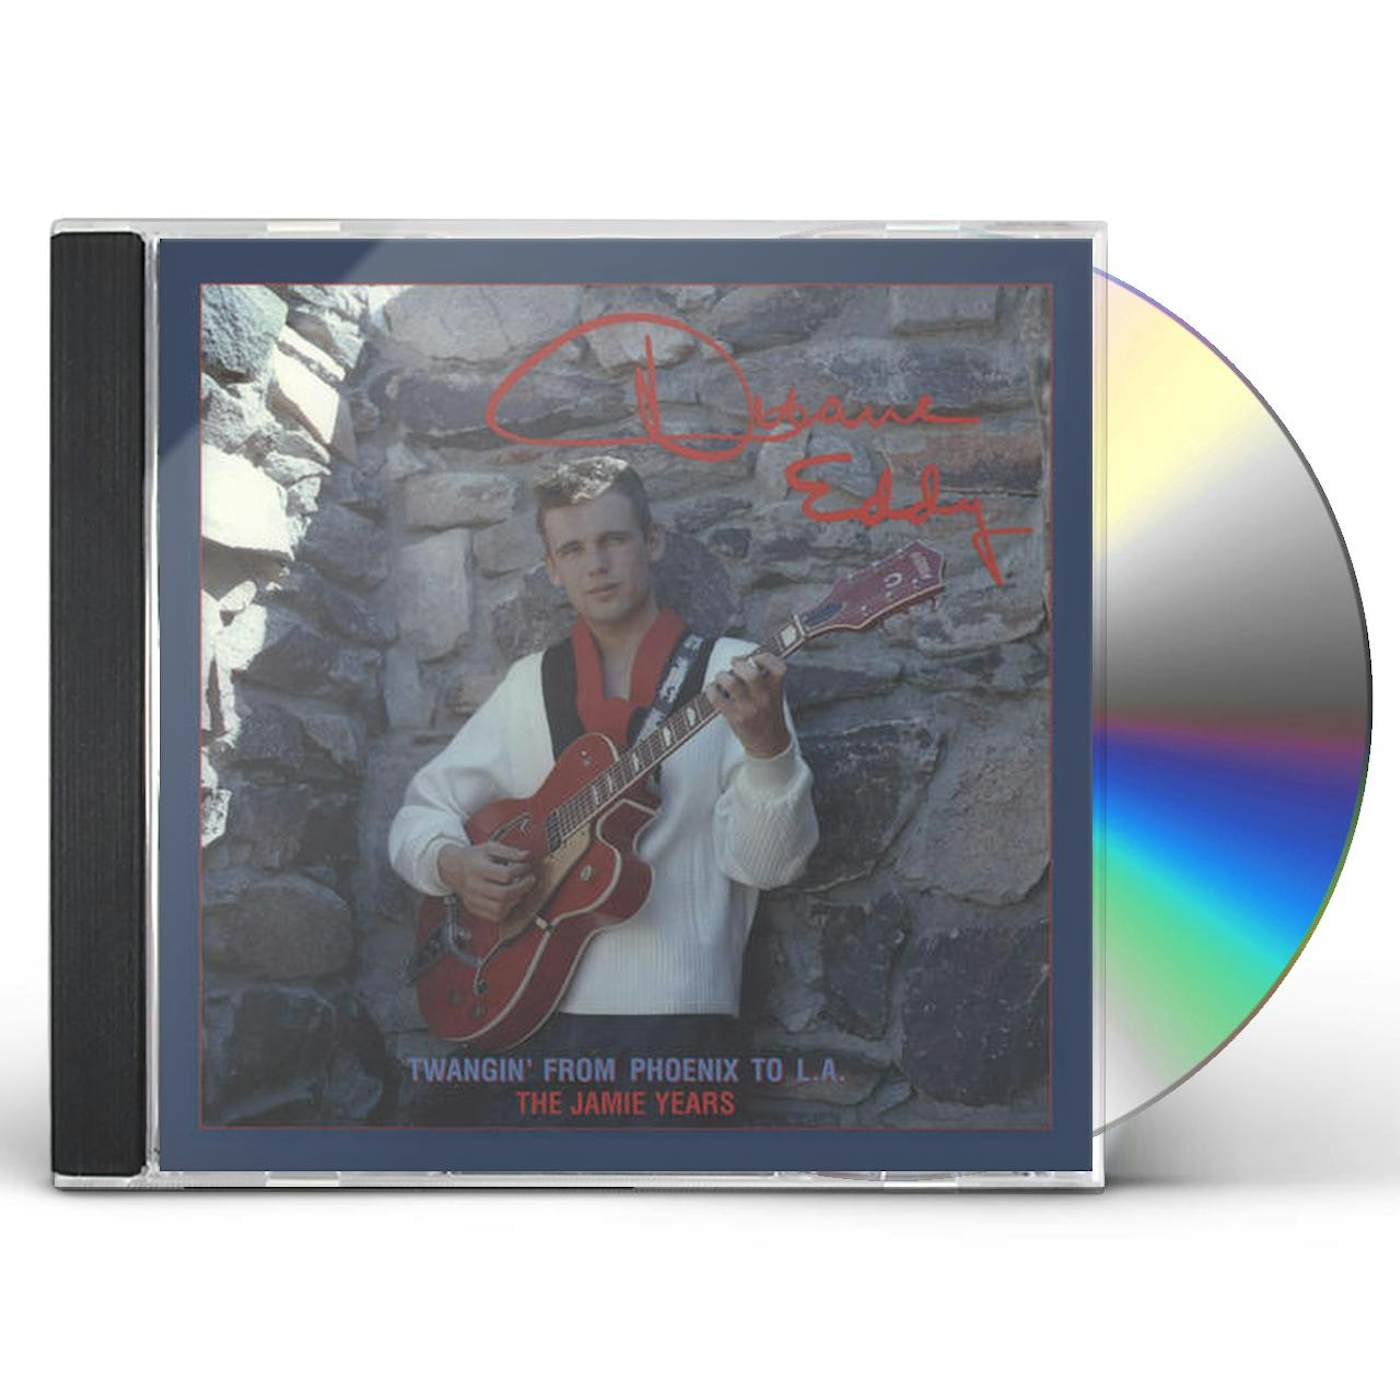 Eddy Duane TWANGIN' FROM PHOENIX TO L.A.-JAMIE YEARS CD